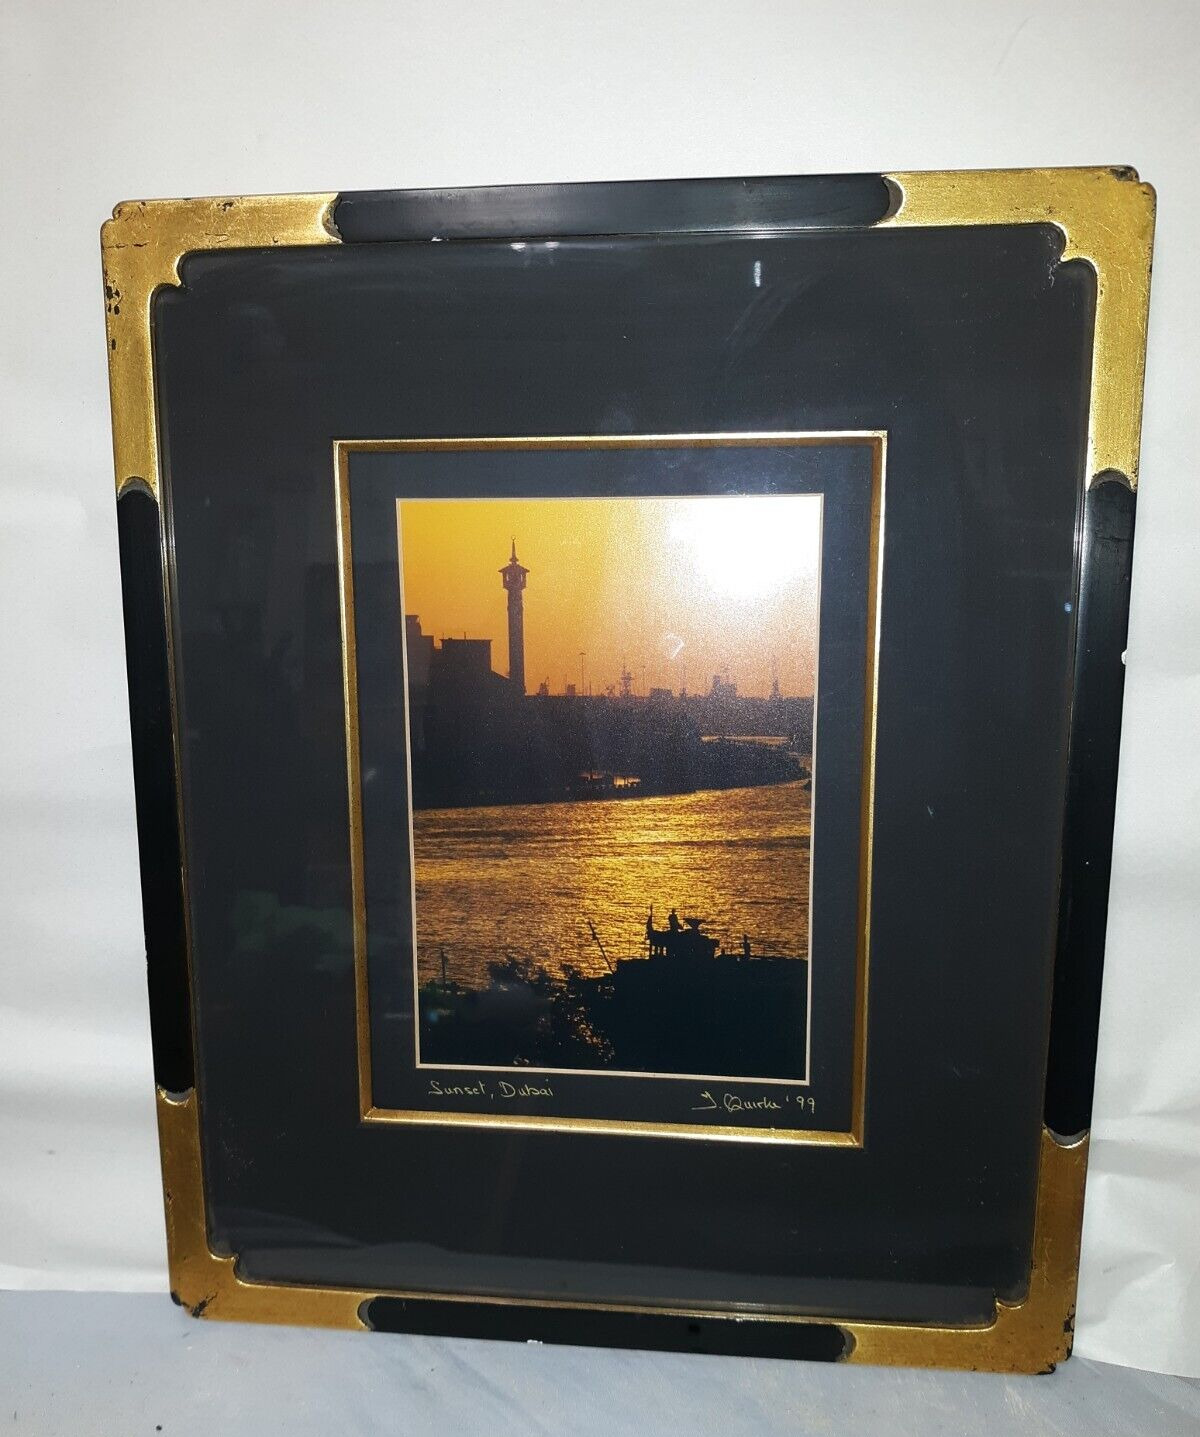 Sunset Dubai Photograph Artist Signed Nicely Framed Vintage 1999